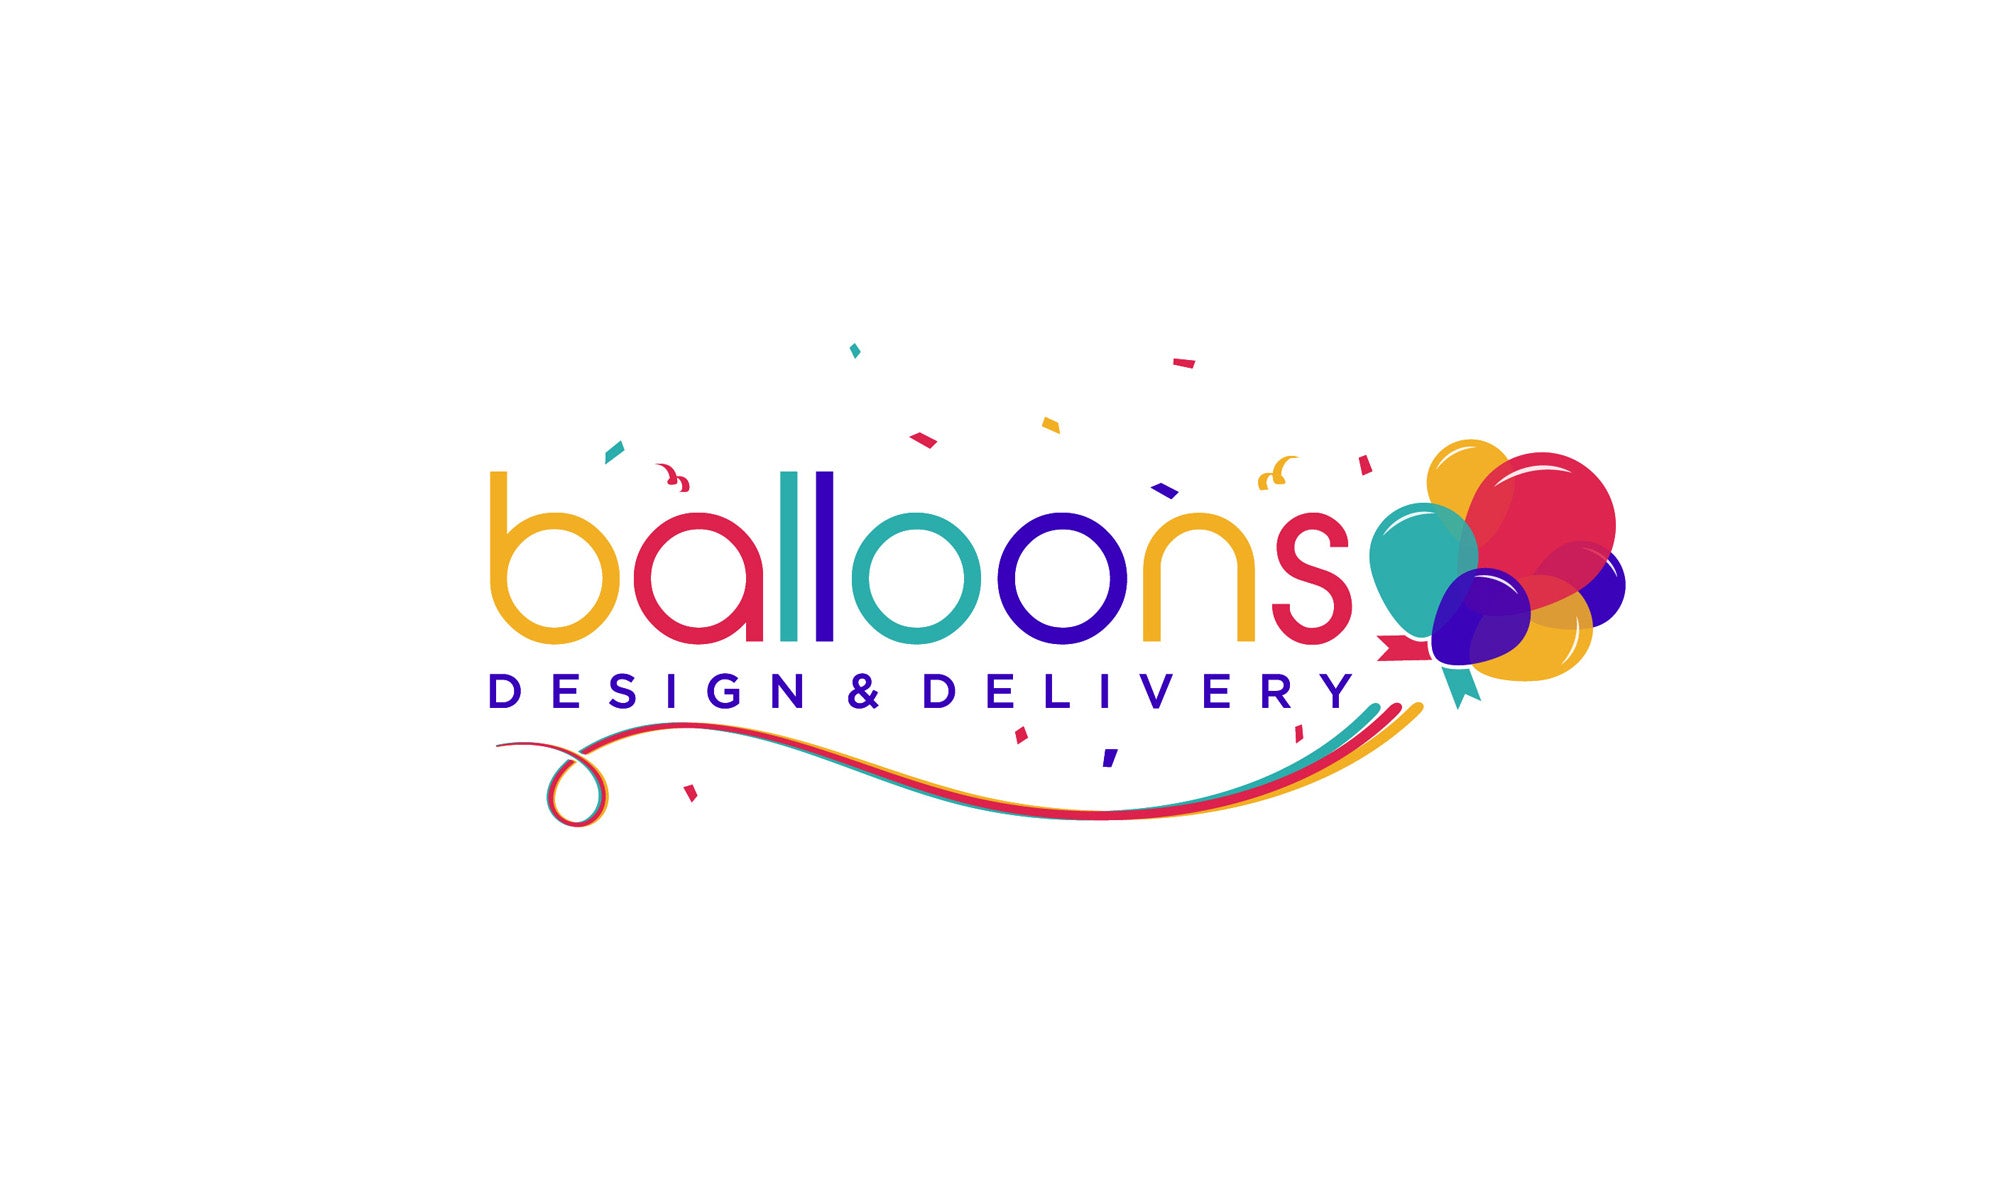 Balloons Design and Delivery, saballoons.com San Antonio, Texas